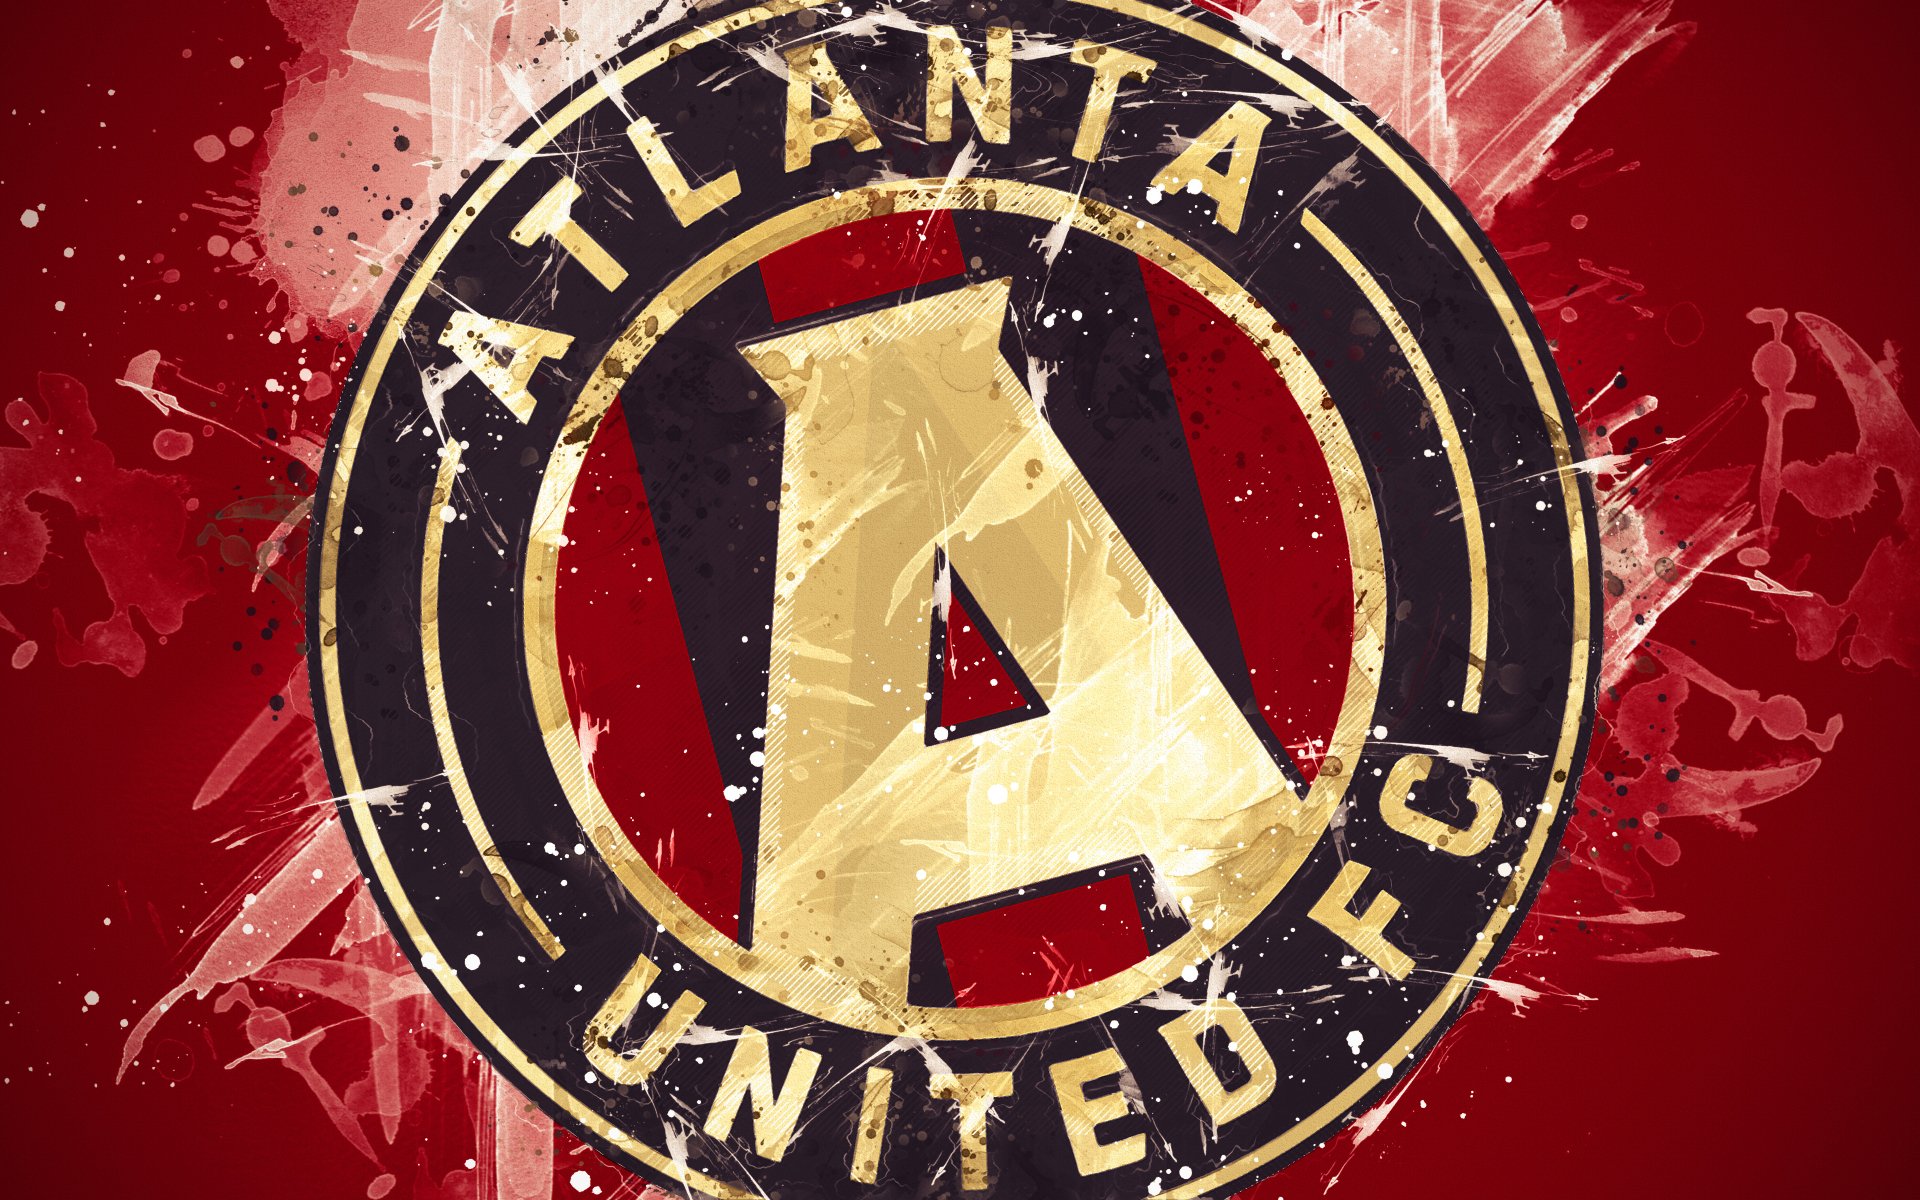 Atlanta United Logo